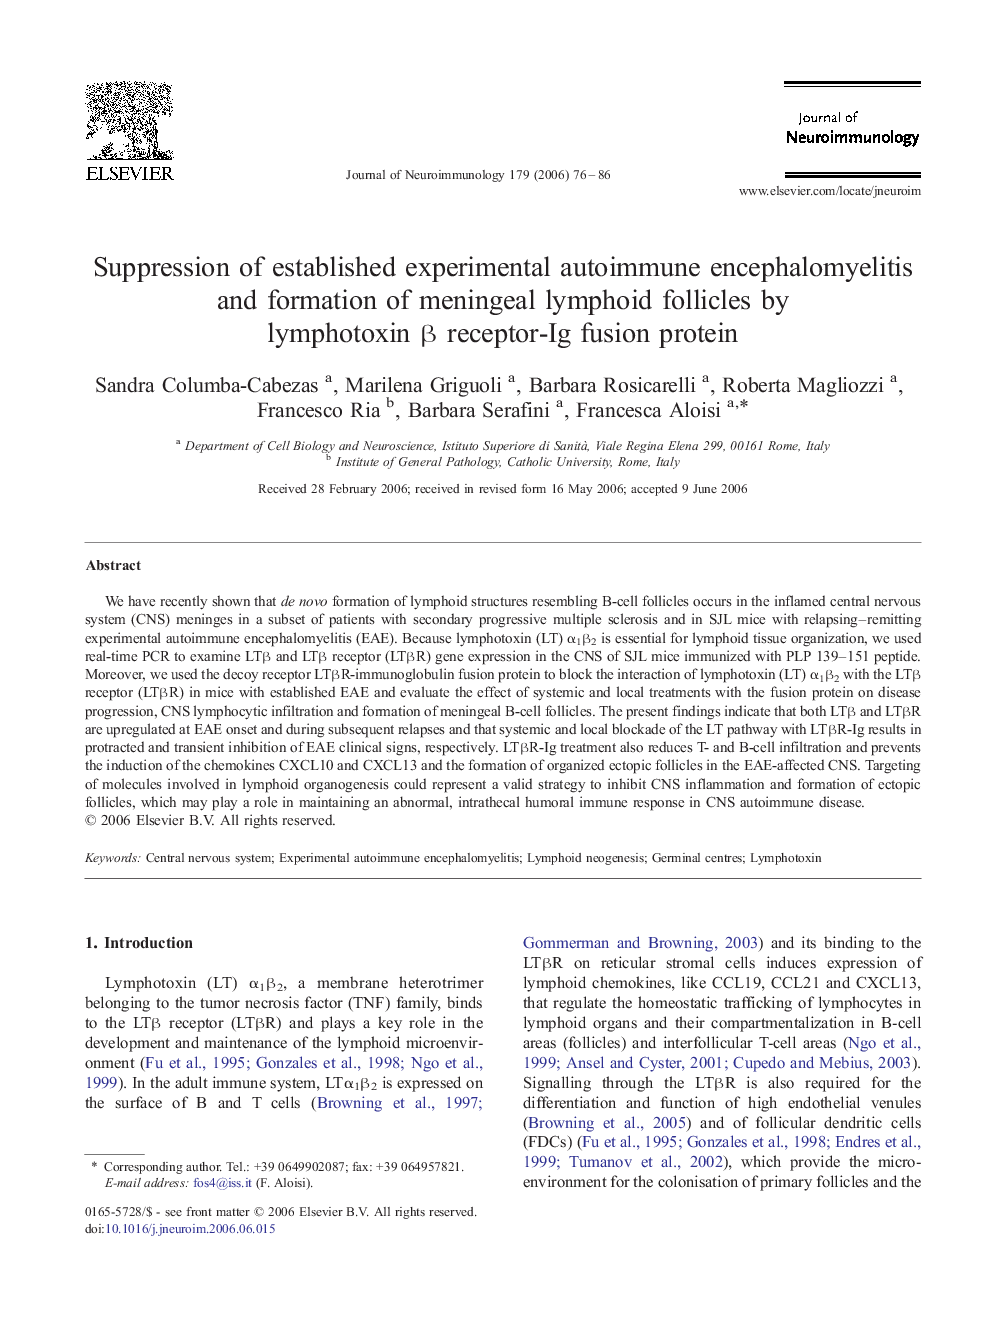 Suppression of established experimental autoimmune encephalomyelitis and formation of meningeal lymphoid follicles by lymphotoxin β receptor-Ig fusion protein